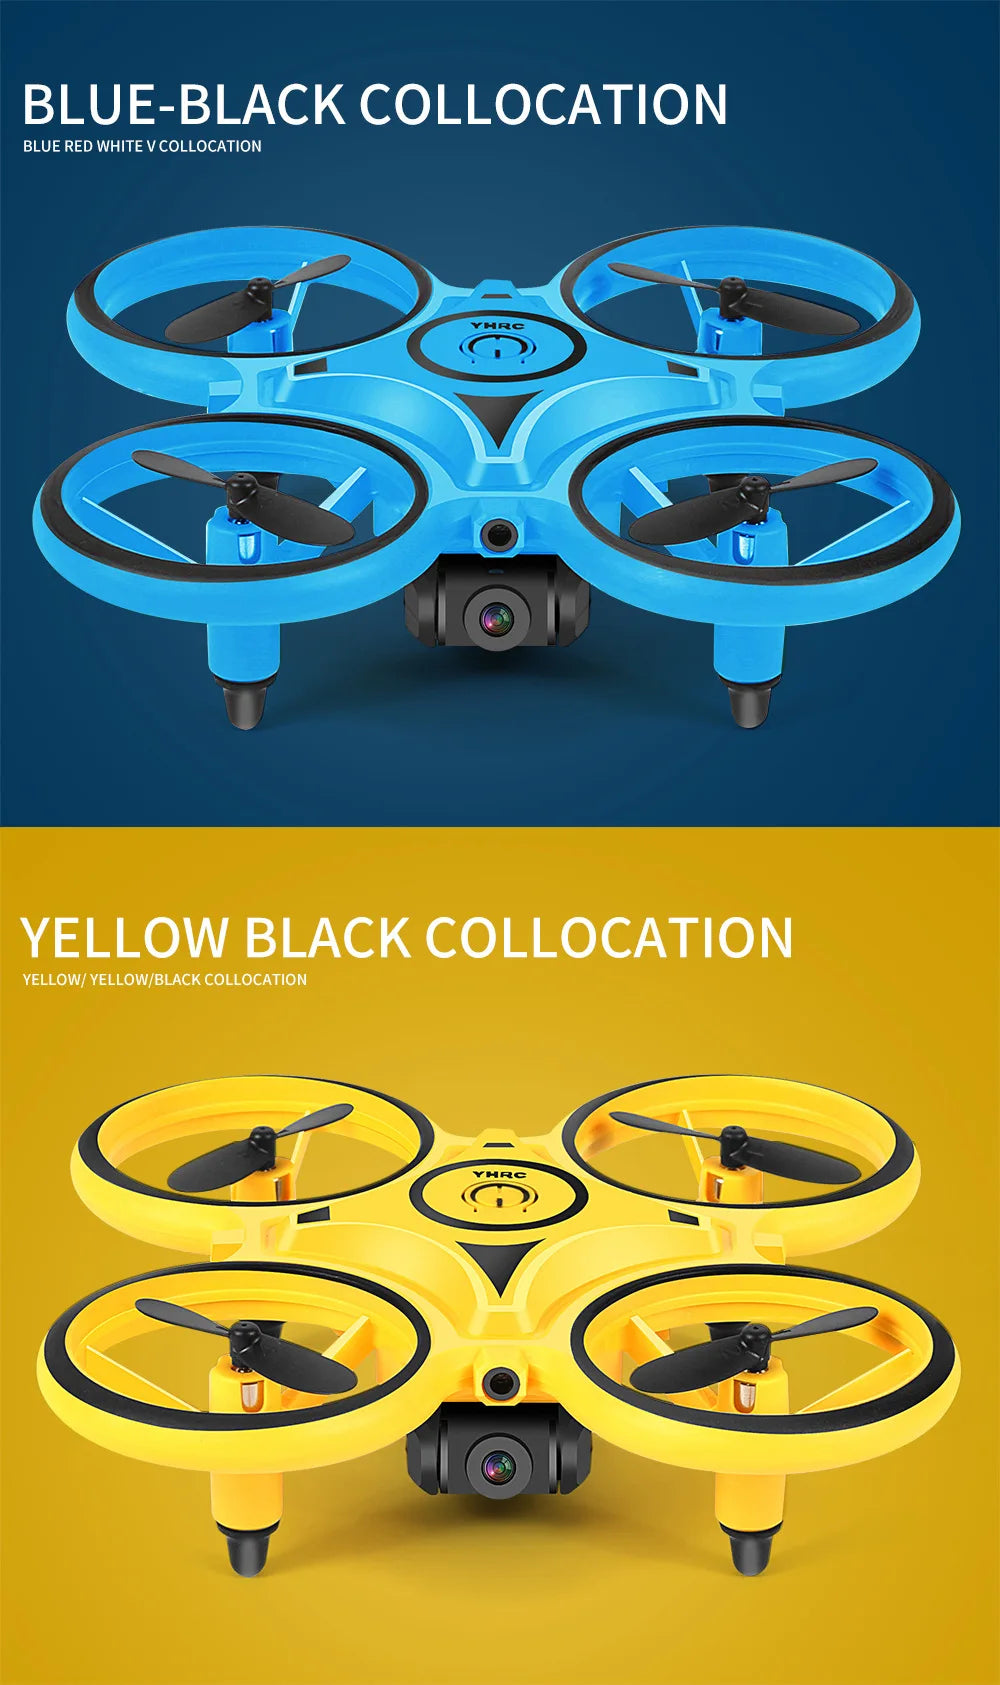 HGRC 2.4G Mini Watch RC Drone, BLUE-BLACK COLLOCATION HRC YELLOW BLACK COLL